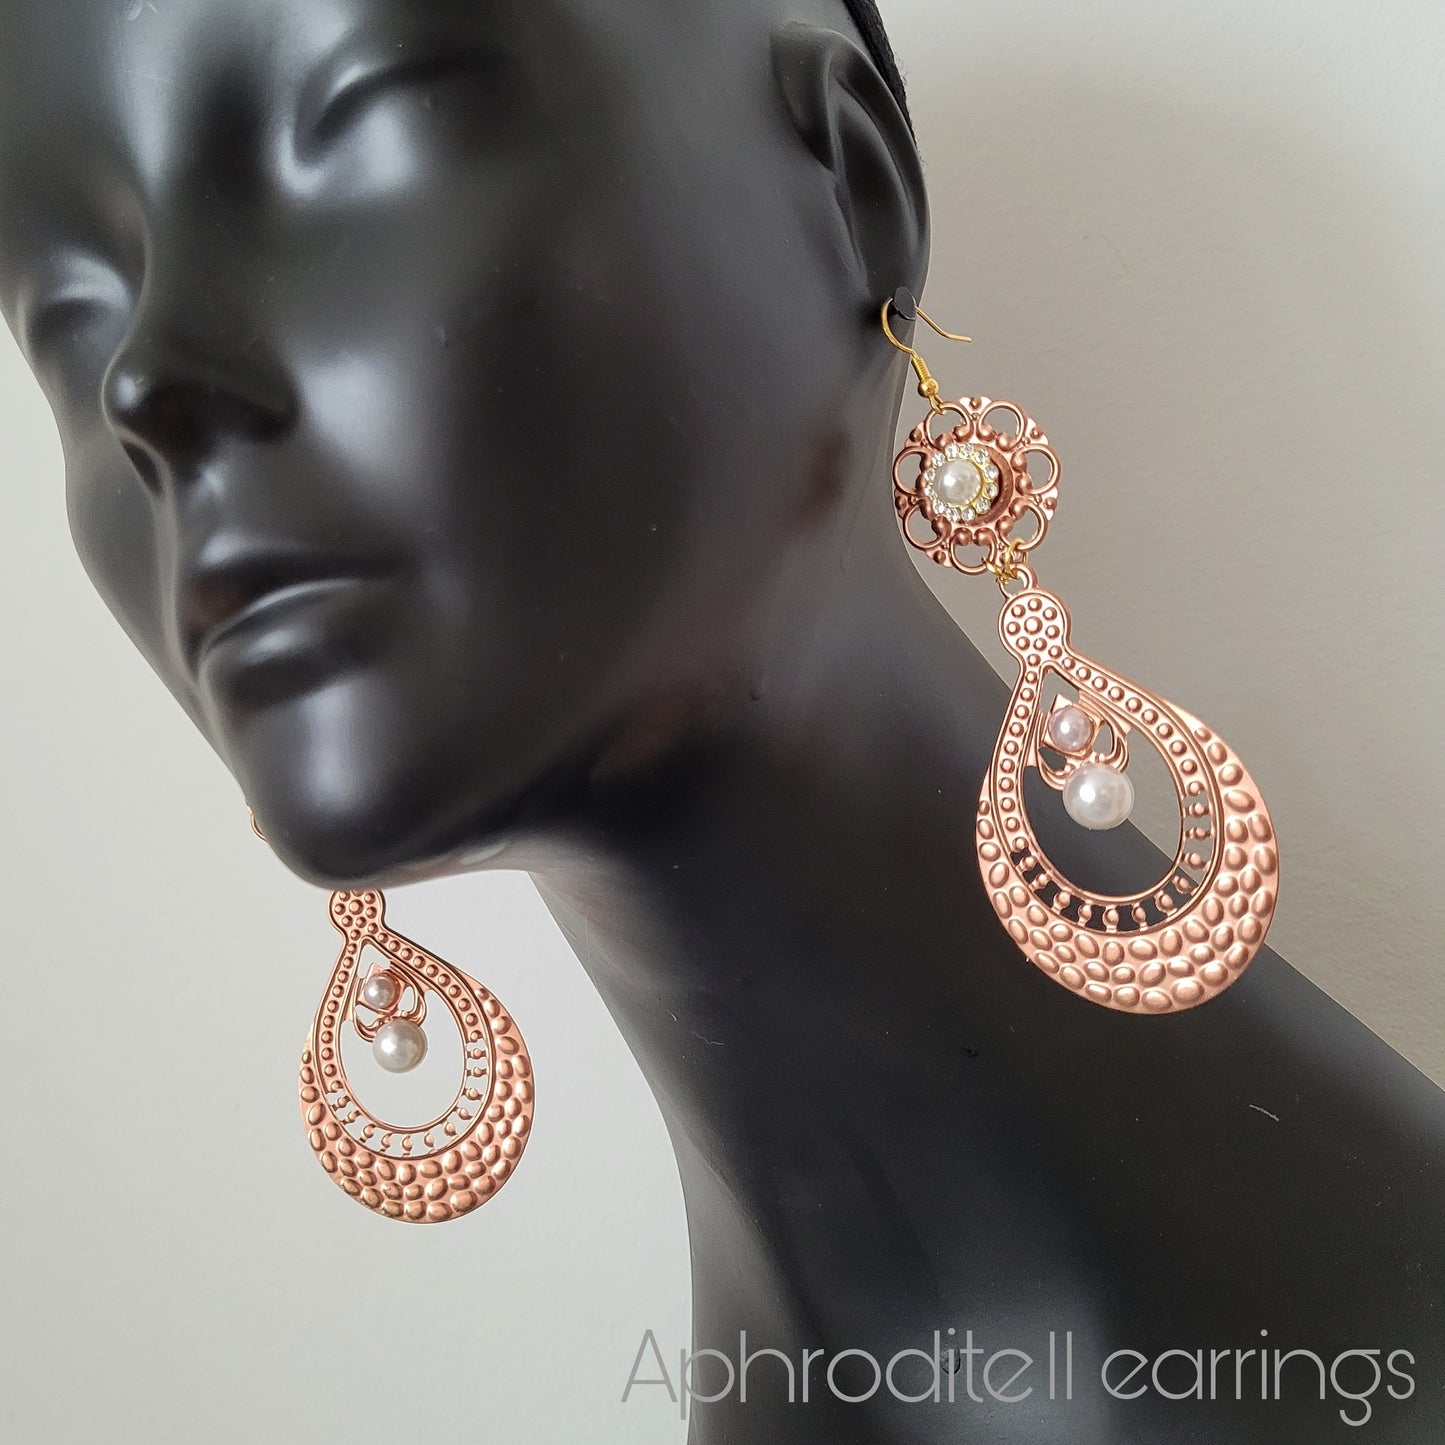 Deusa ex Machina collection: The Aphrodite earrings